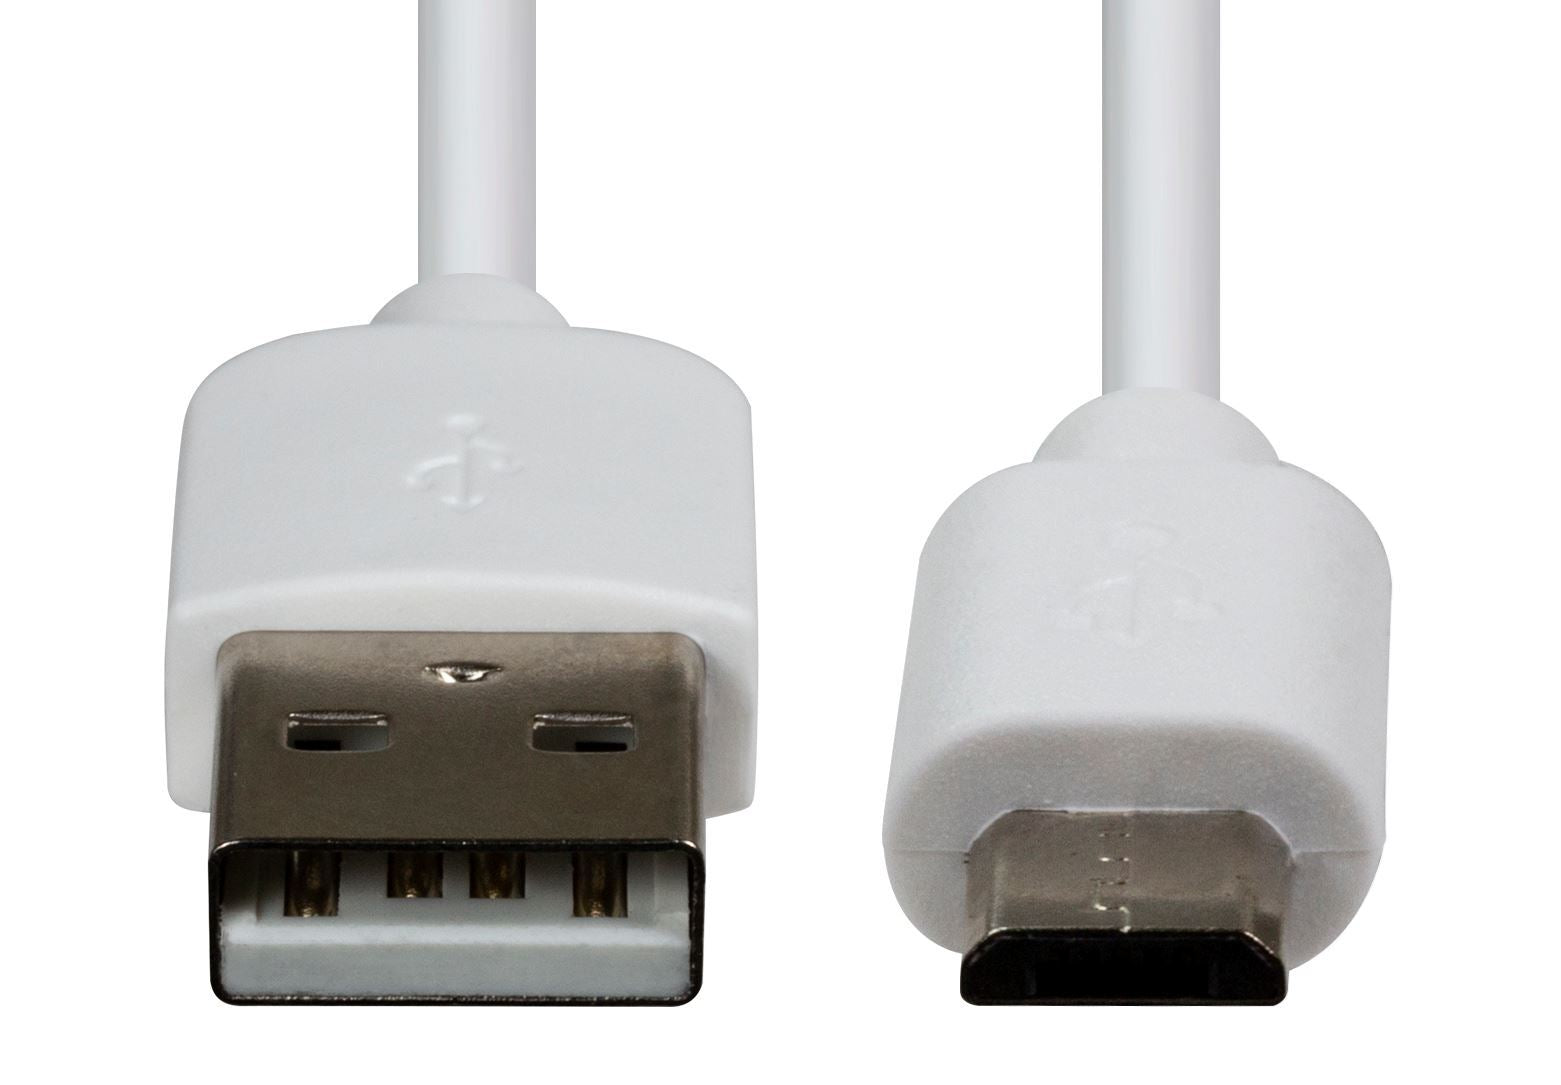 DYNAMIX_1.2m_USB_2.0_Micro-B_Male_to_USB-A_Male_Connectors._Colour_White. 1103